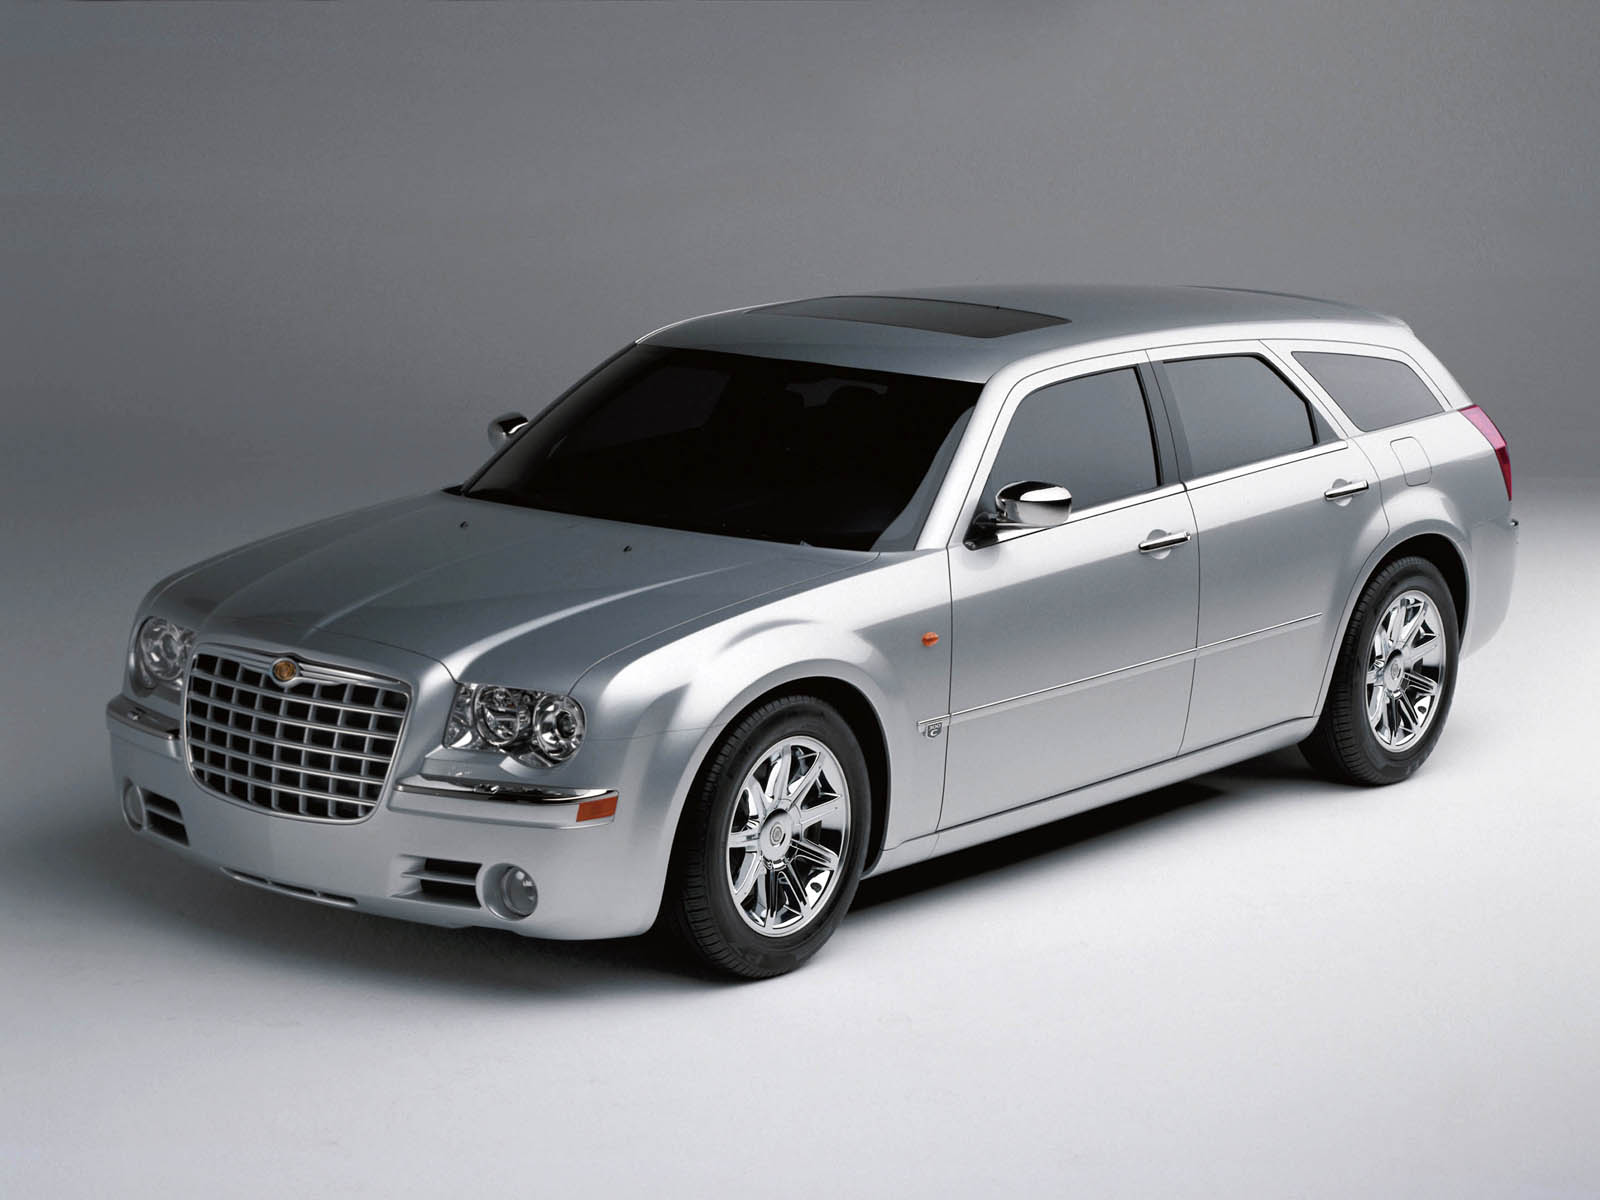 The best of cars: The Chrysler 300